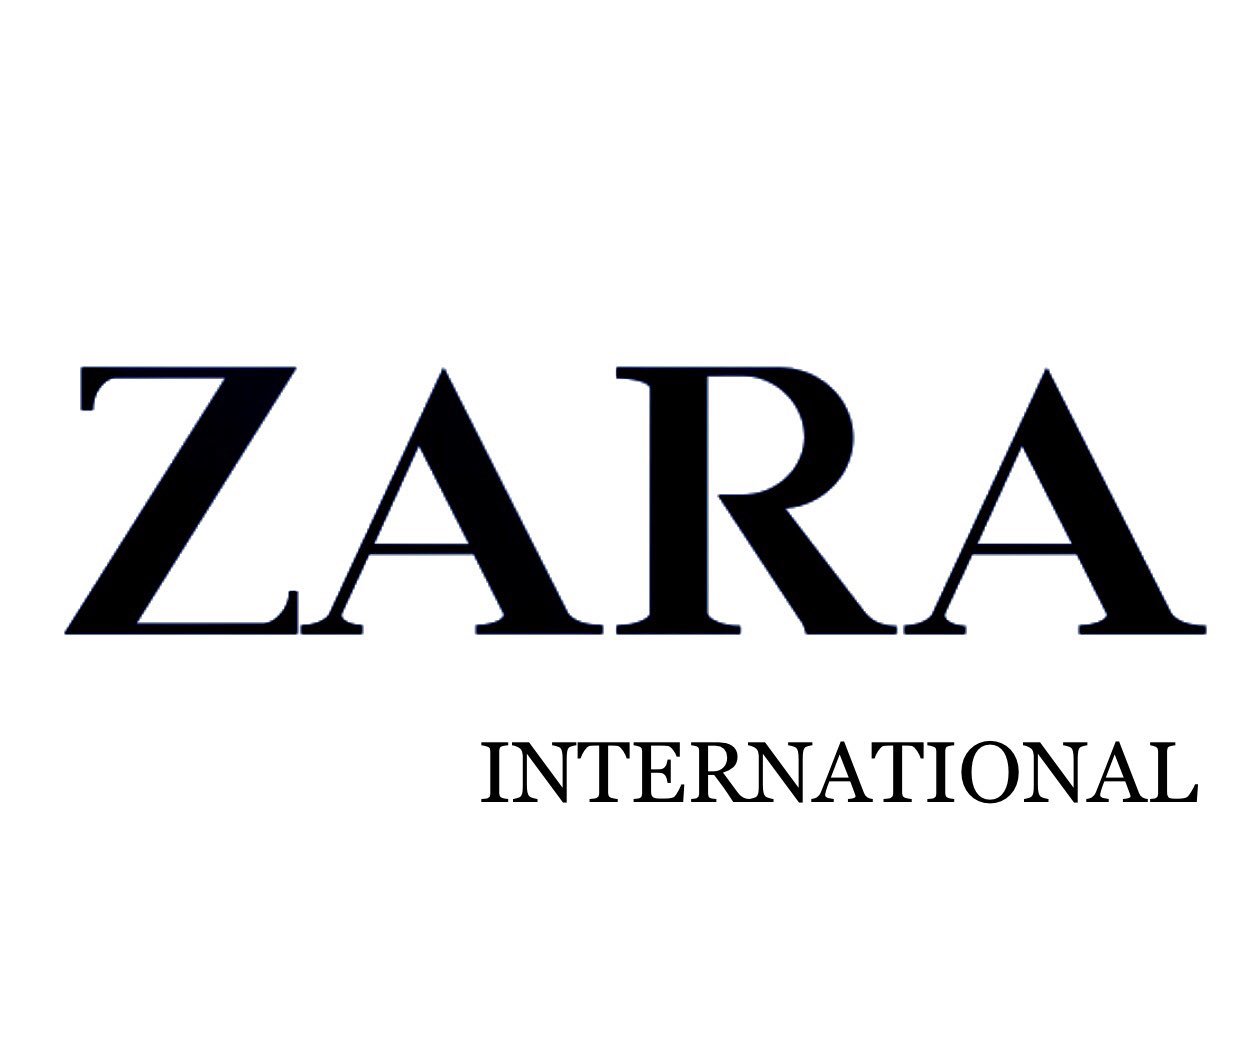 ZARA INTERNATIONAL on Twitter: "ZARA INTERNATIONAL on #Google  https://t.co/mfCz3Vr7rZ https://t.co/RqWvz1D5Ky" / Twitter